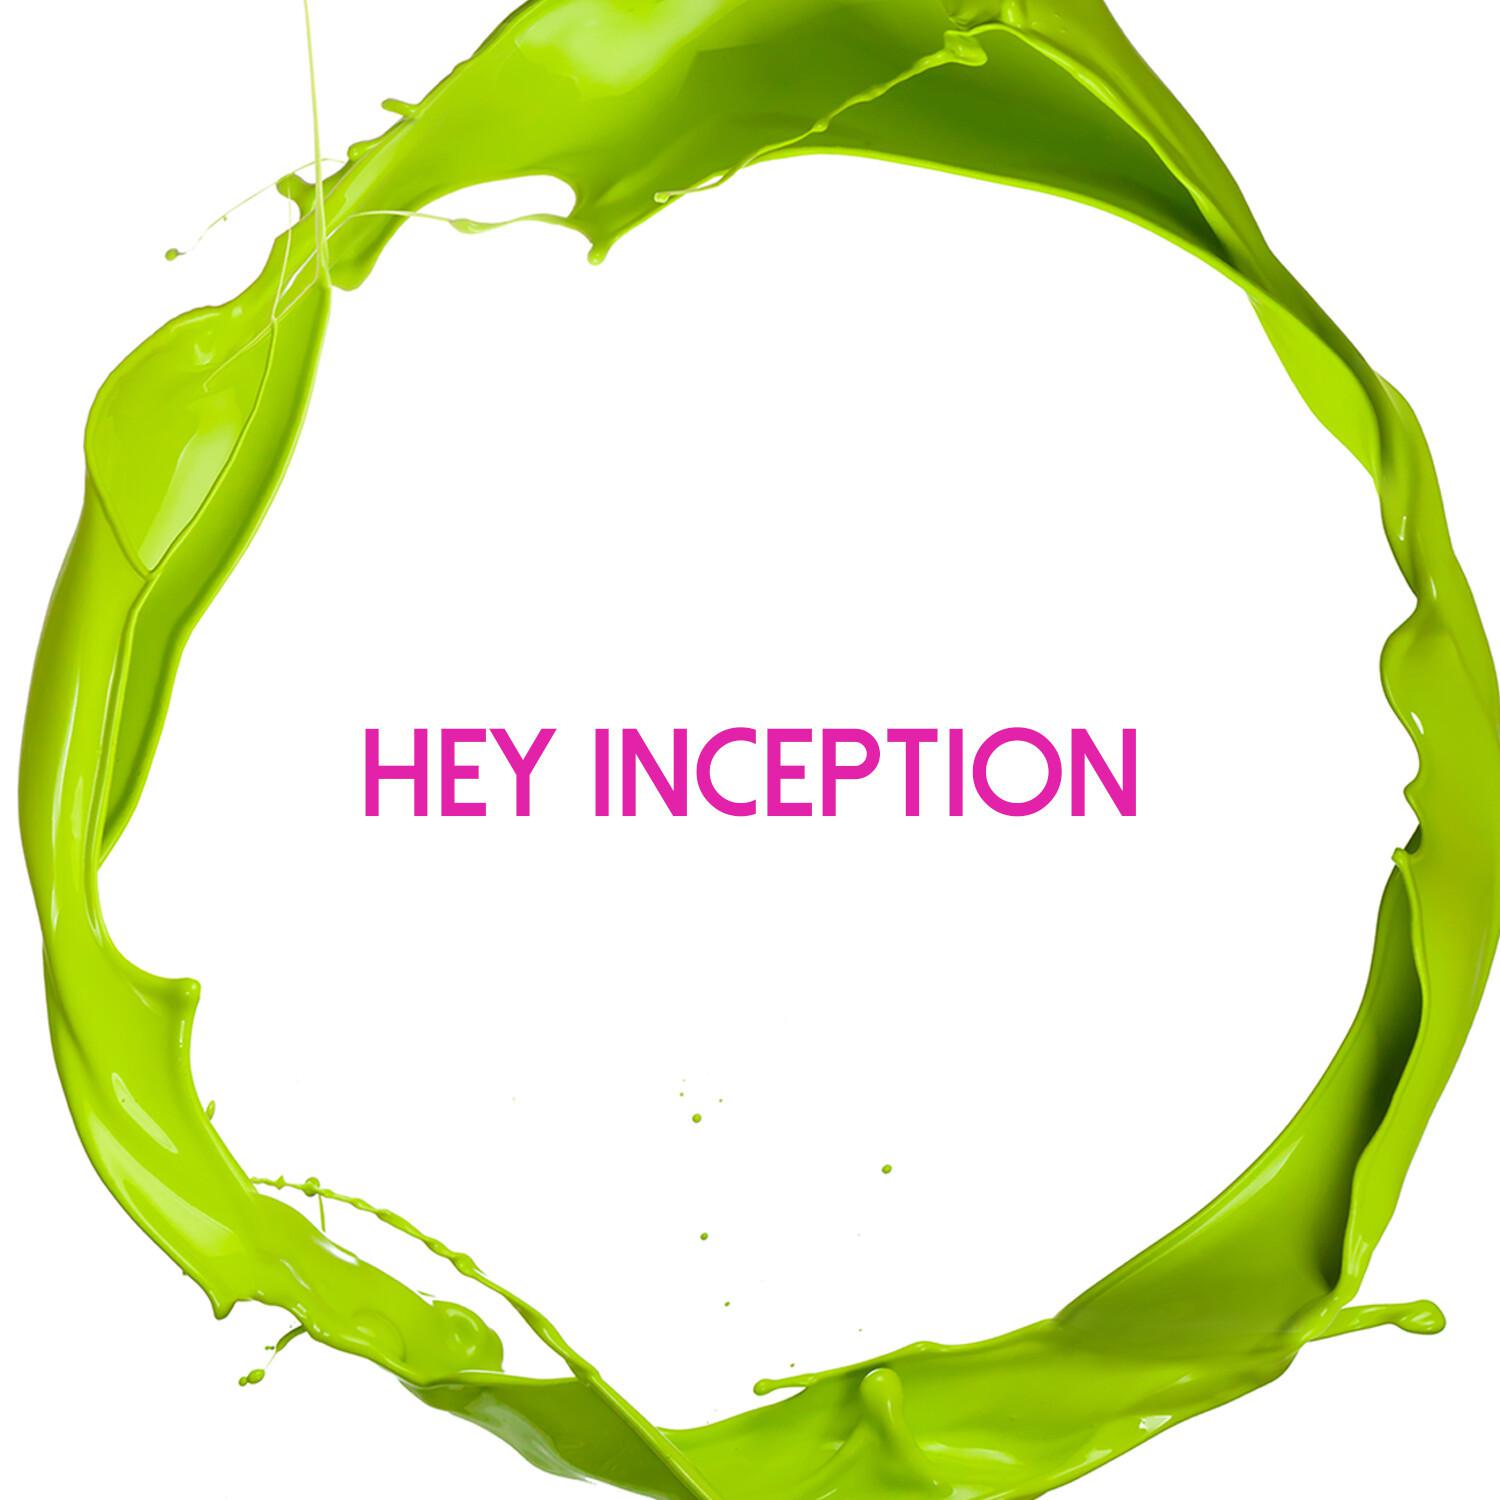 Hey Inception